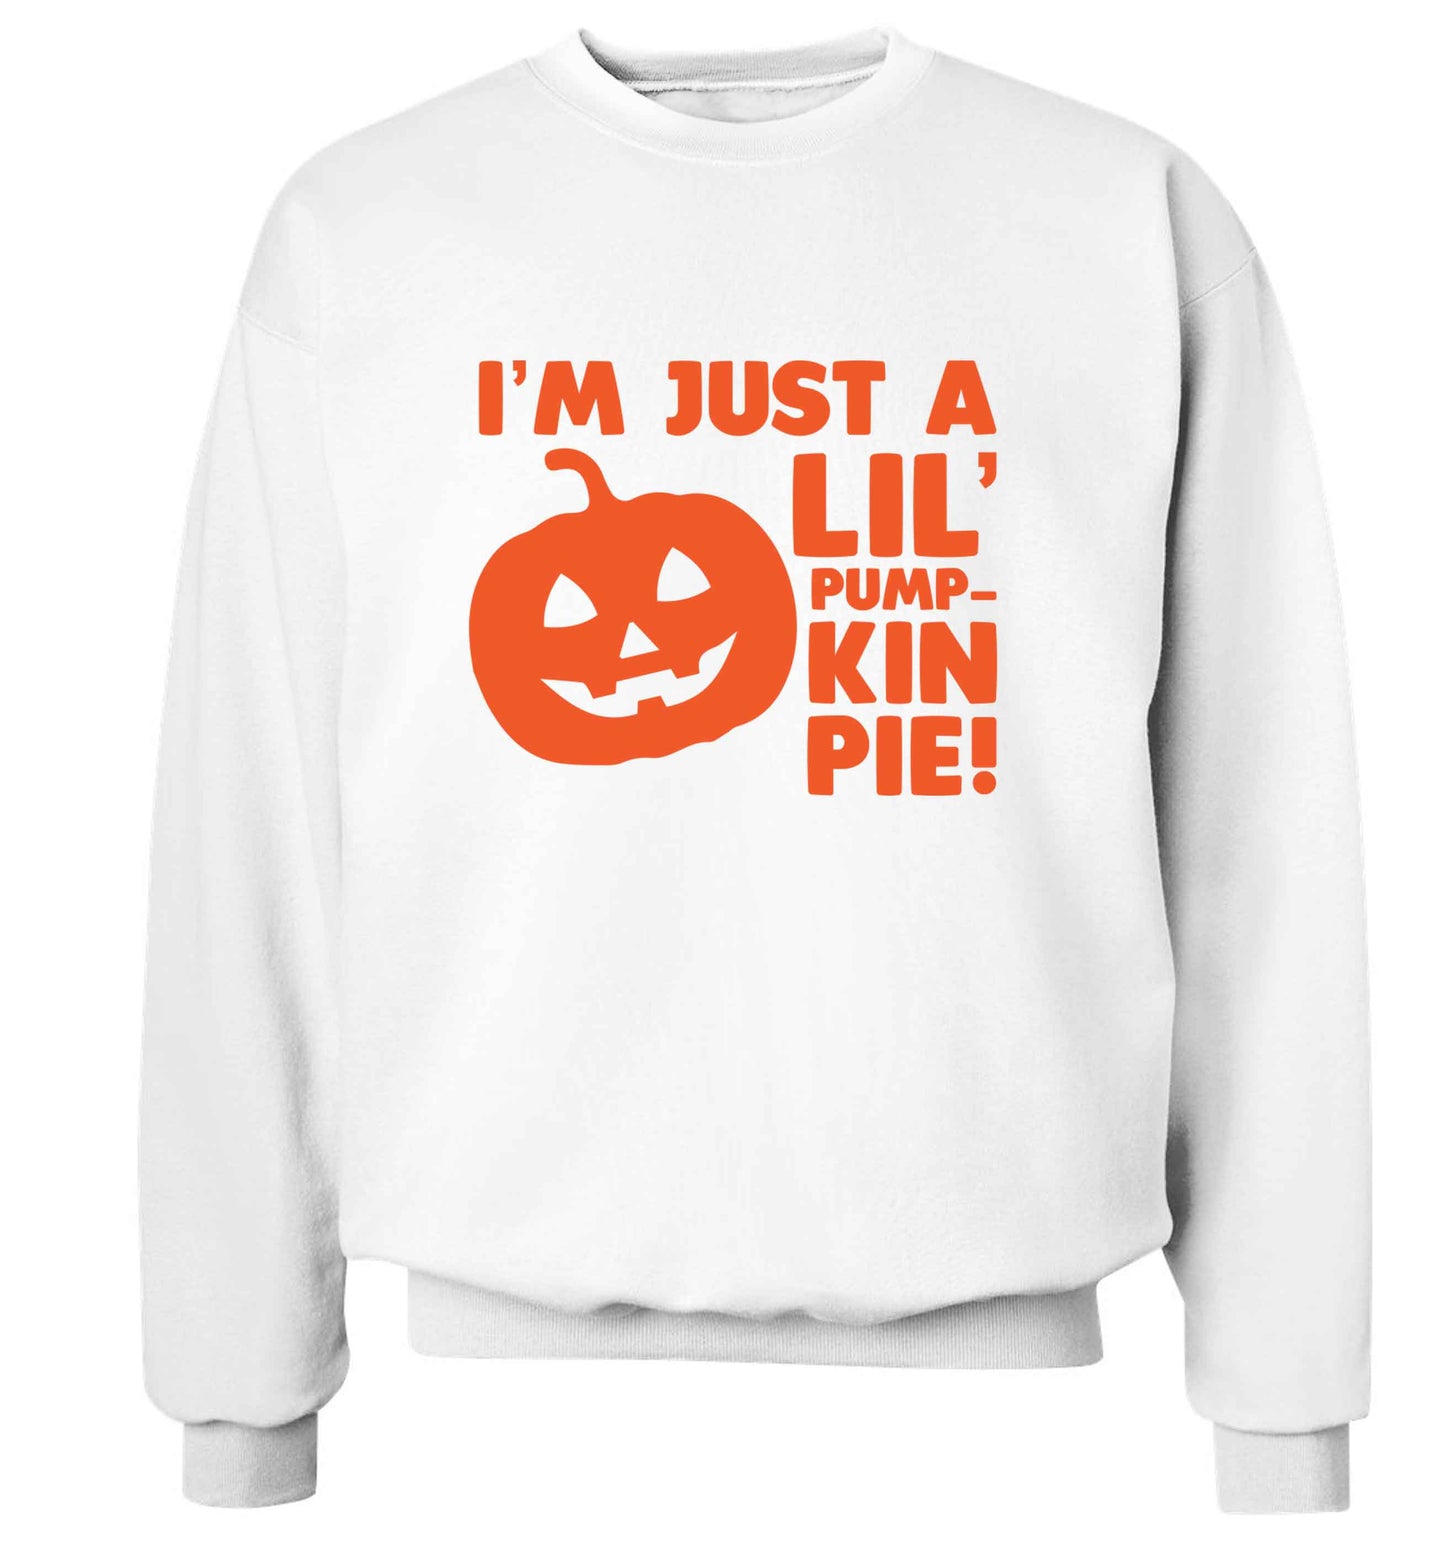 I'm just a lil' pumpkin pie adult's unisex white sweater 2XL